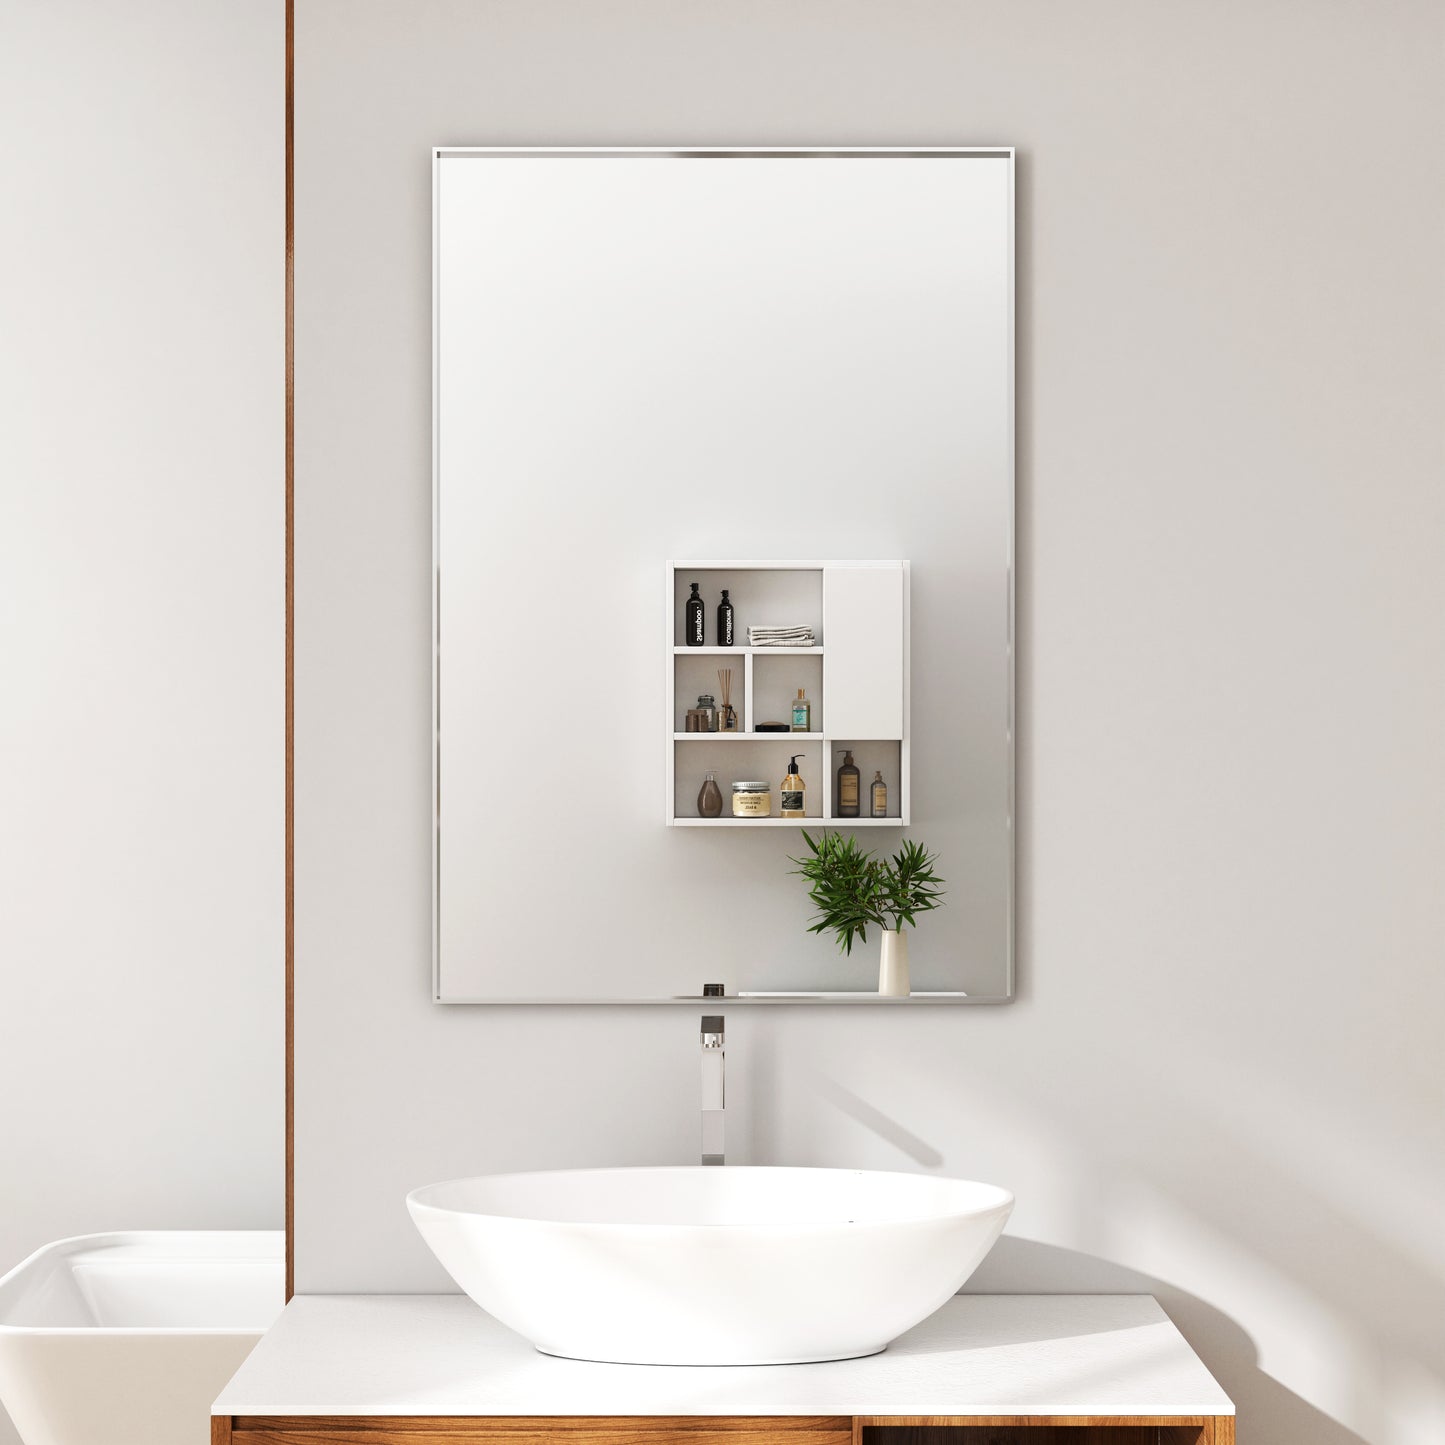 Waterpar® 24 in. W x 36 in. H Rectangular Aluminum Framed Wall Bathroom Vanity Mirror